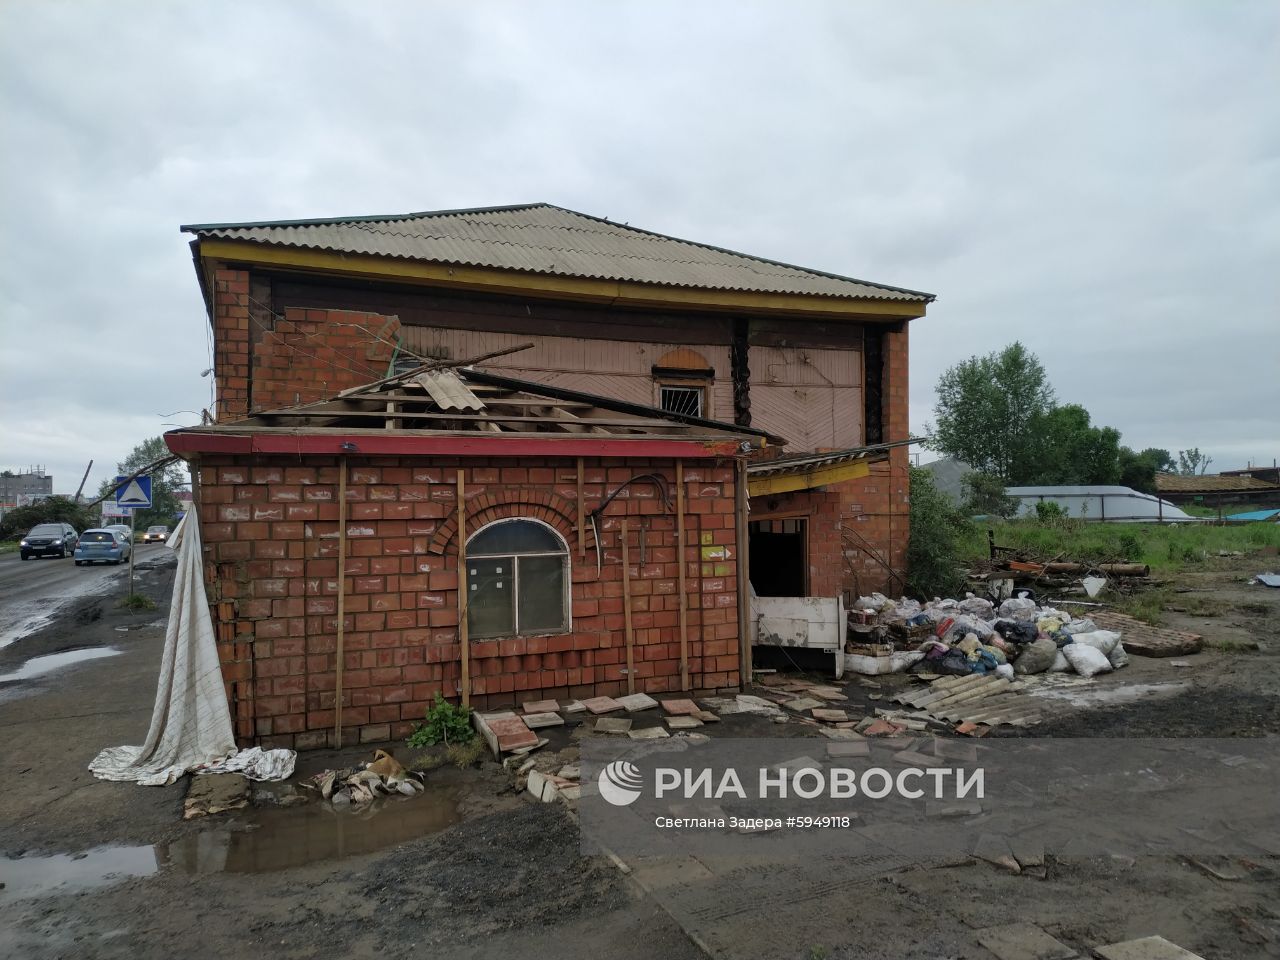 Последствия паводка в Иркутской области Последствия паводка в Иркутской области